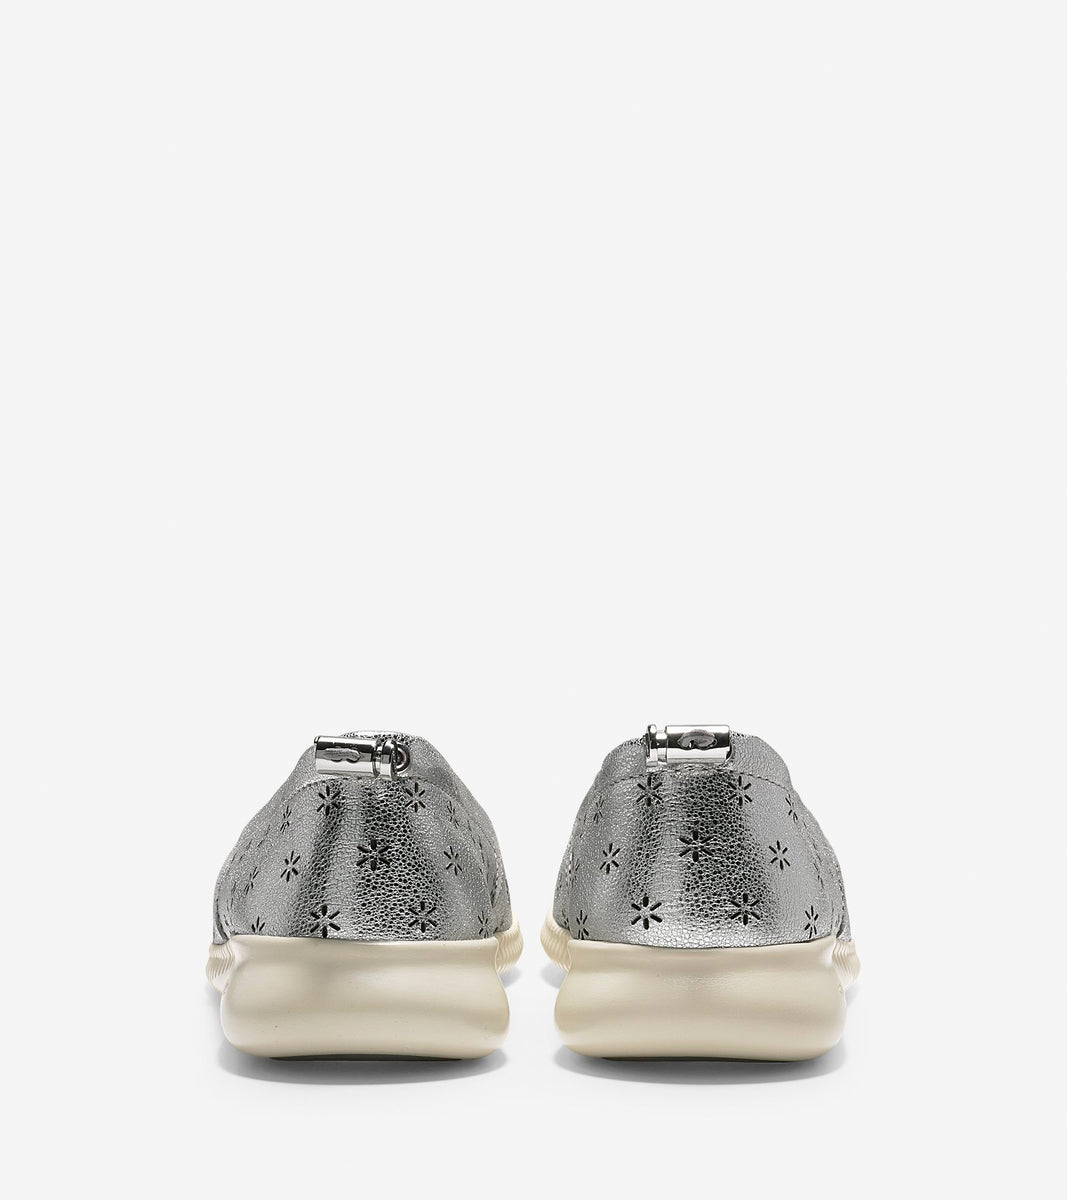 ColeHaan-StudiøGrand Perforated Slip-On Sneaker-w10396-Silver Metallic Perforated-fog